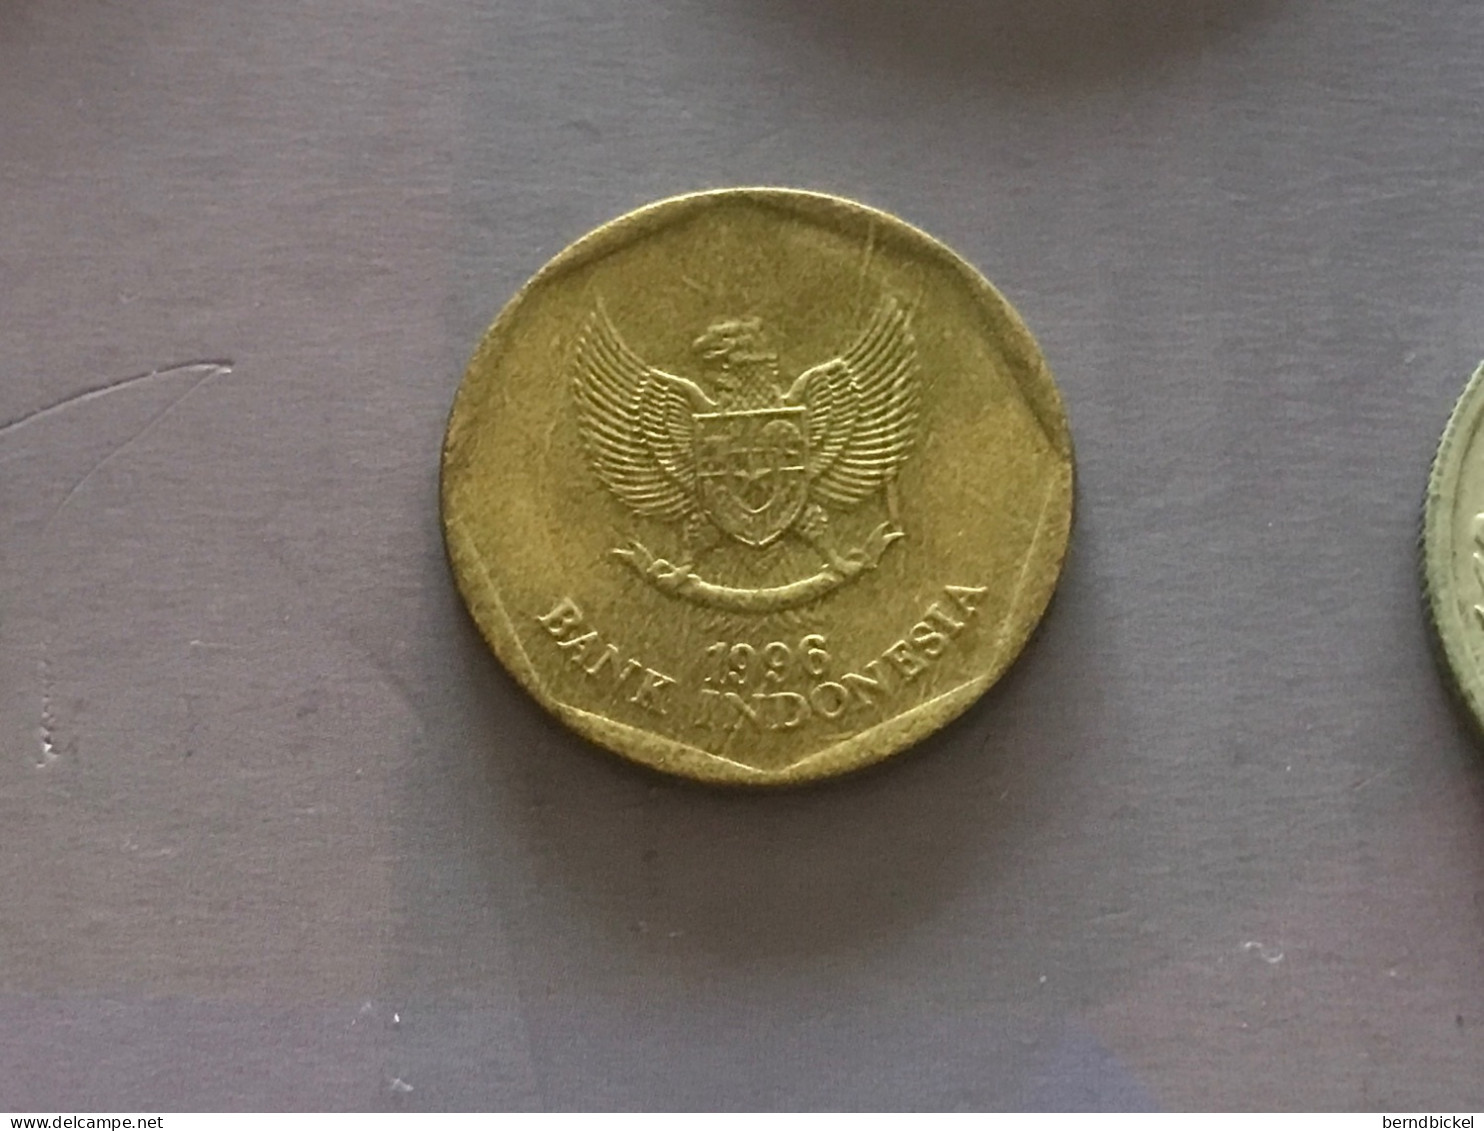 Münze Münzen Umlaufmünze Indonesien 100 Rupien 1996 - Indonesië